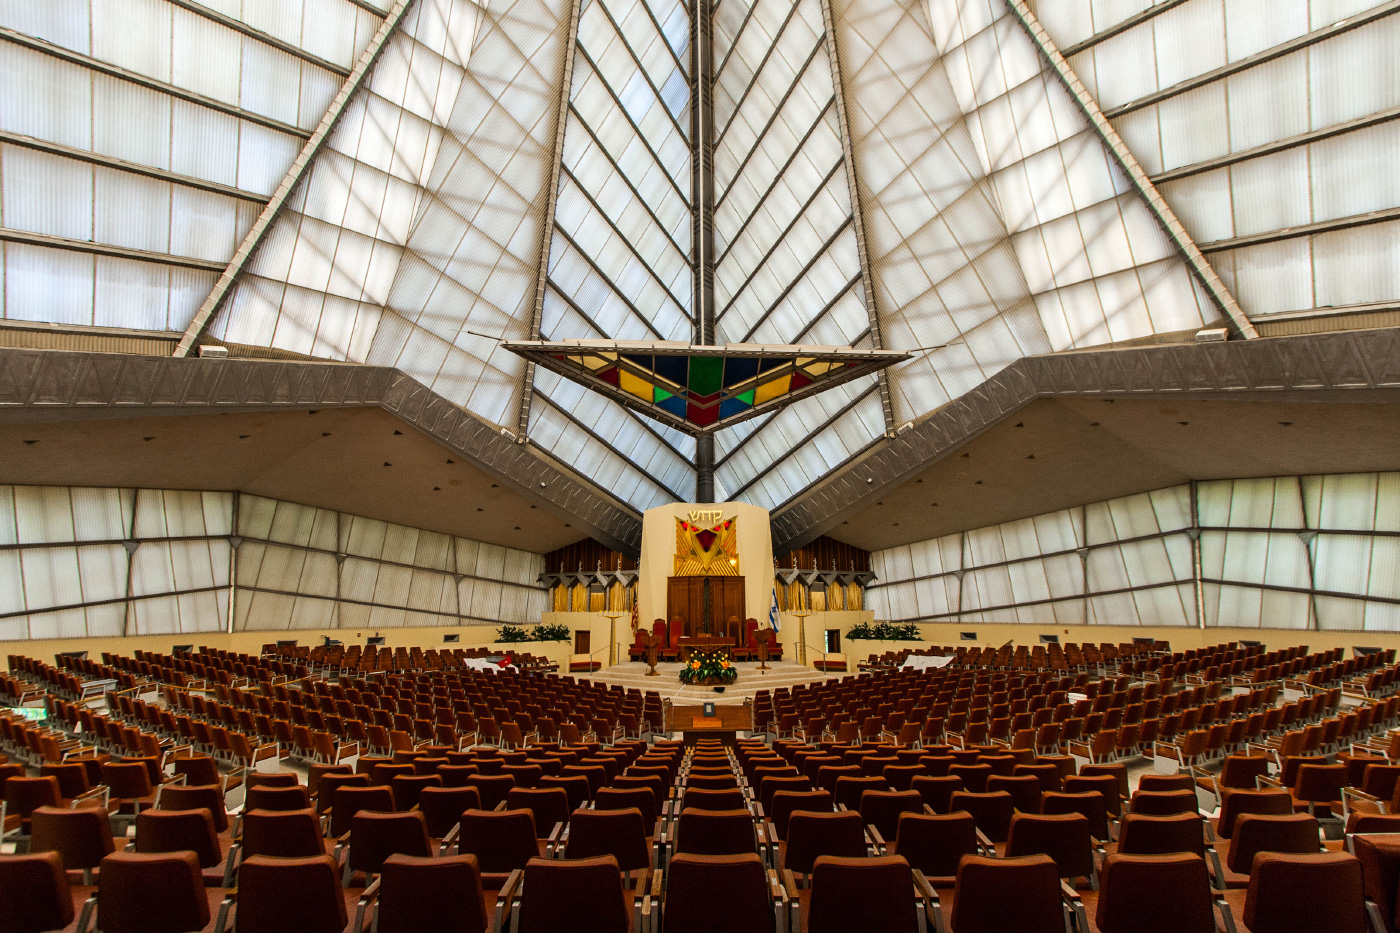 高耸的玻璃犹太教堂内部，Beth Sholom，由Frank lloyd Wright设计